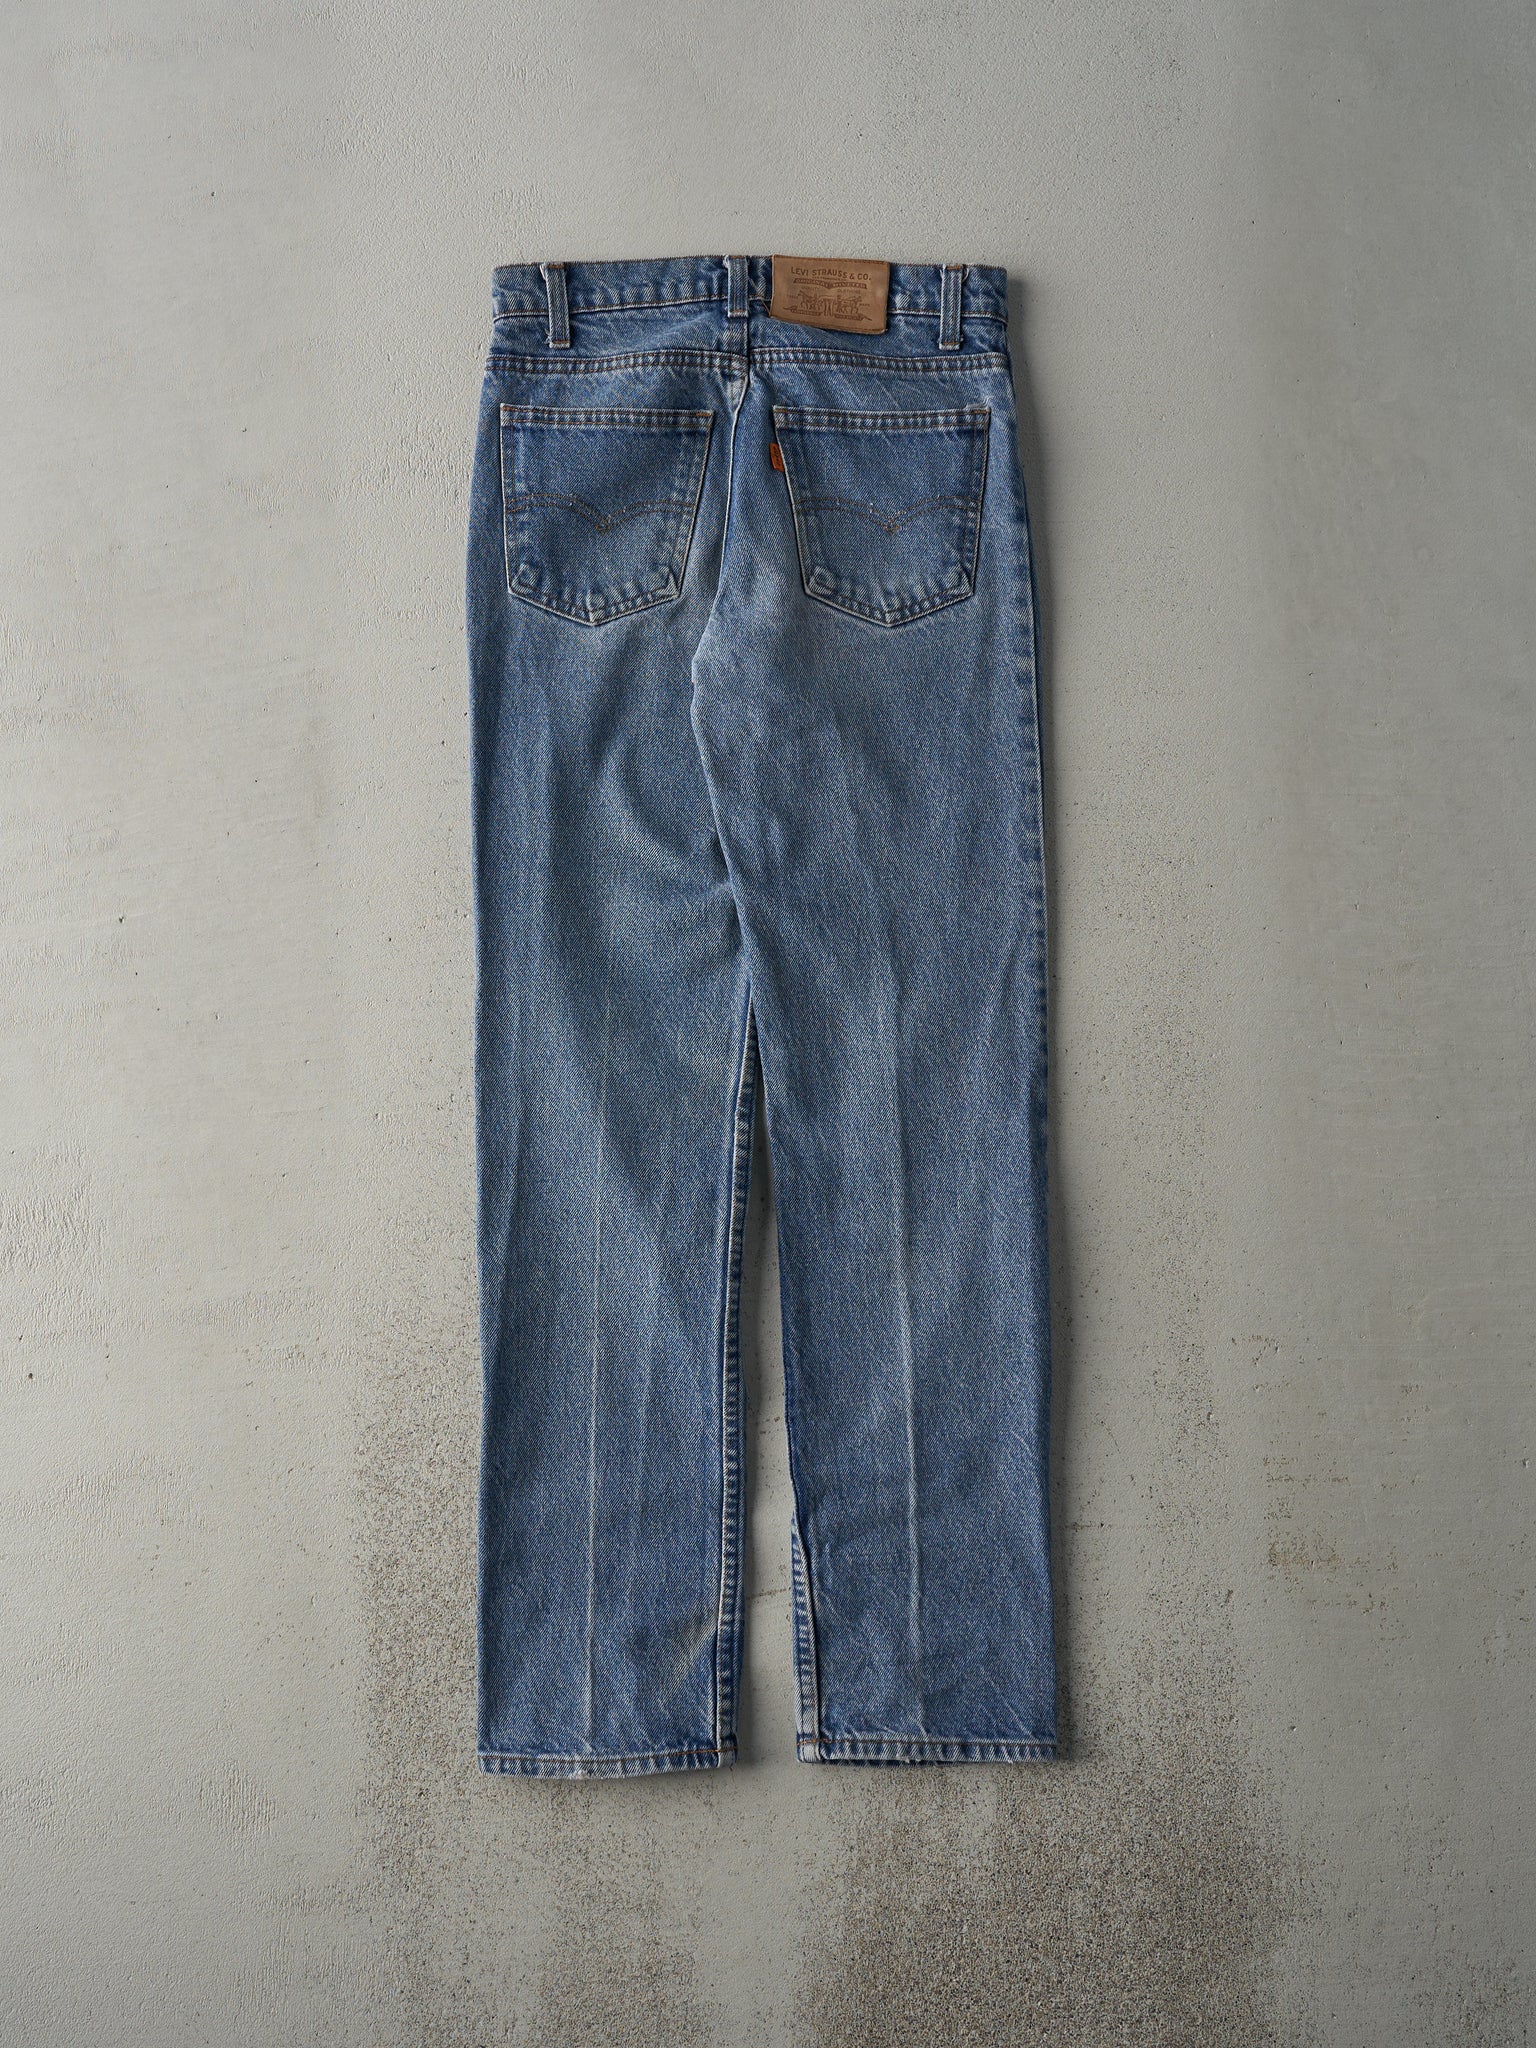 Vintage 80s Light Wash Levi's Orange Tab Jeans (28x30)